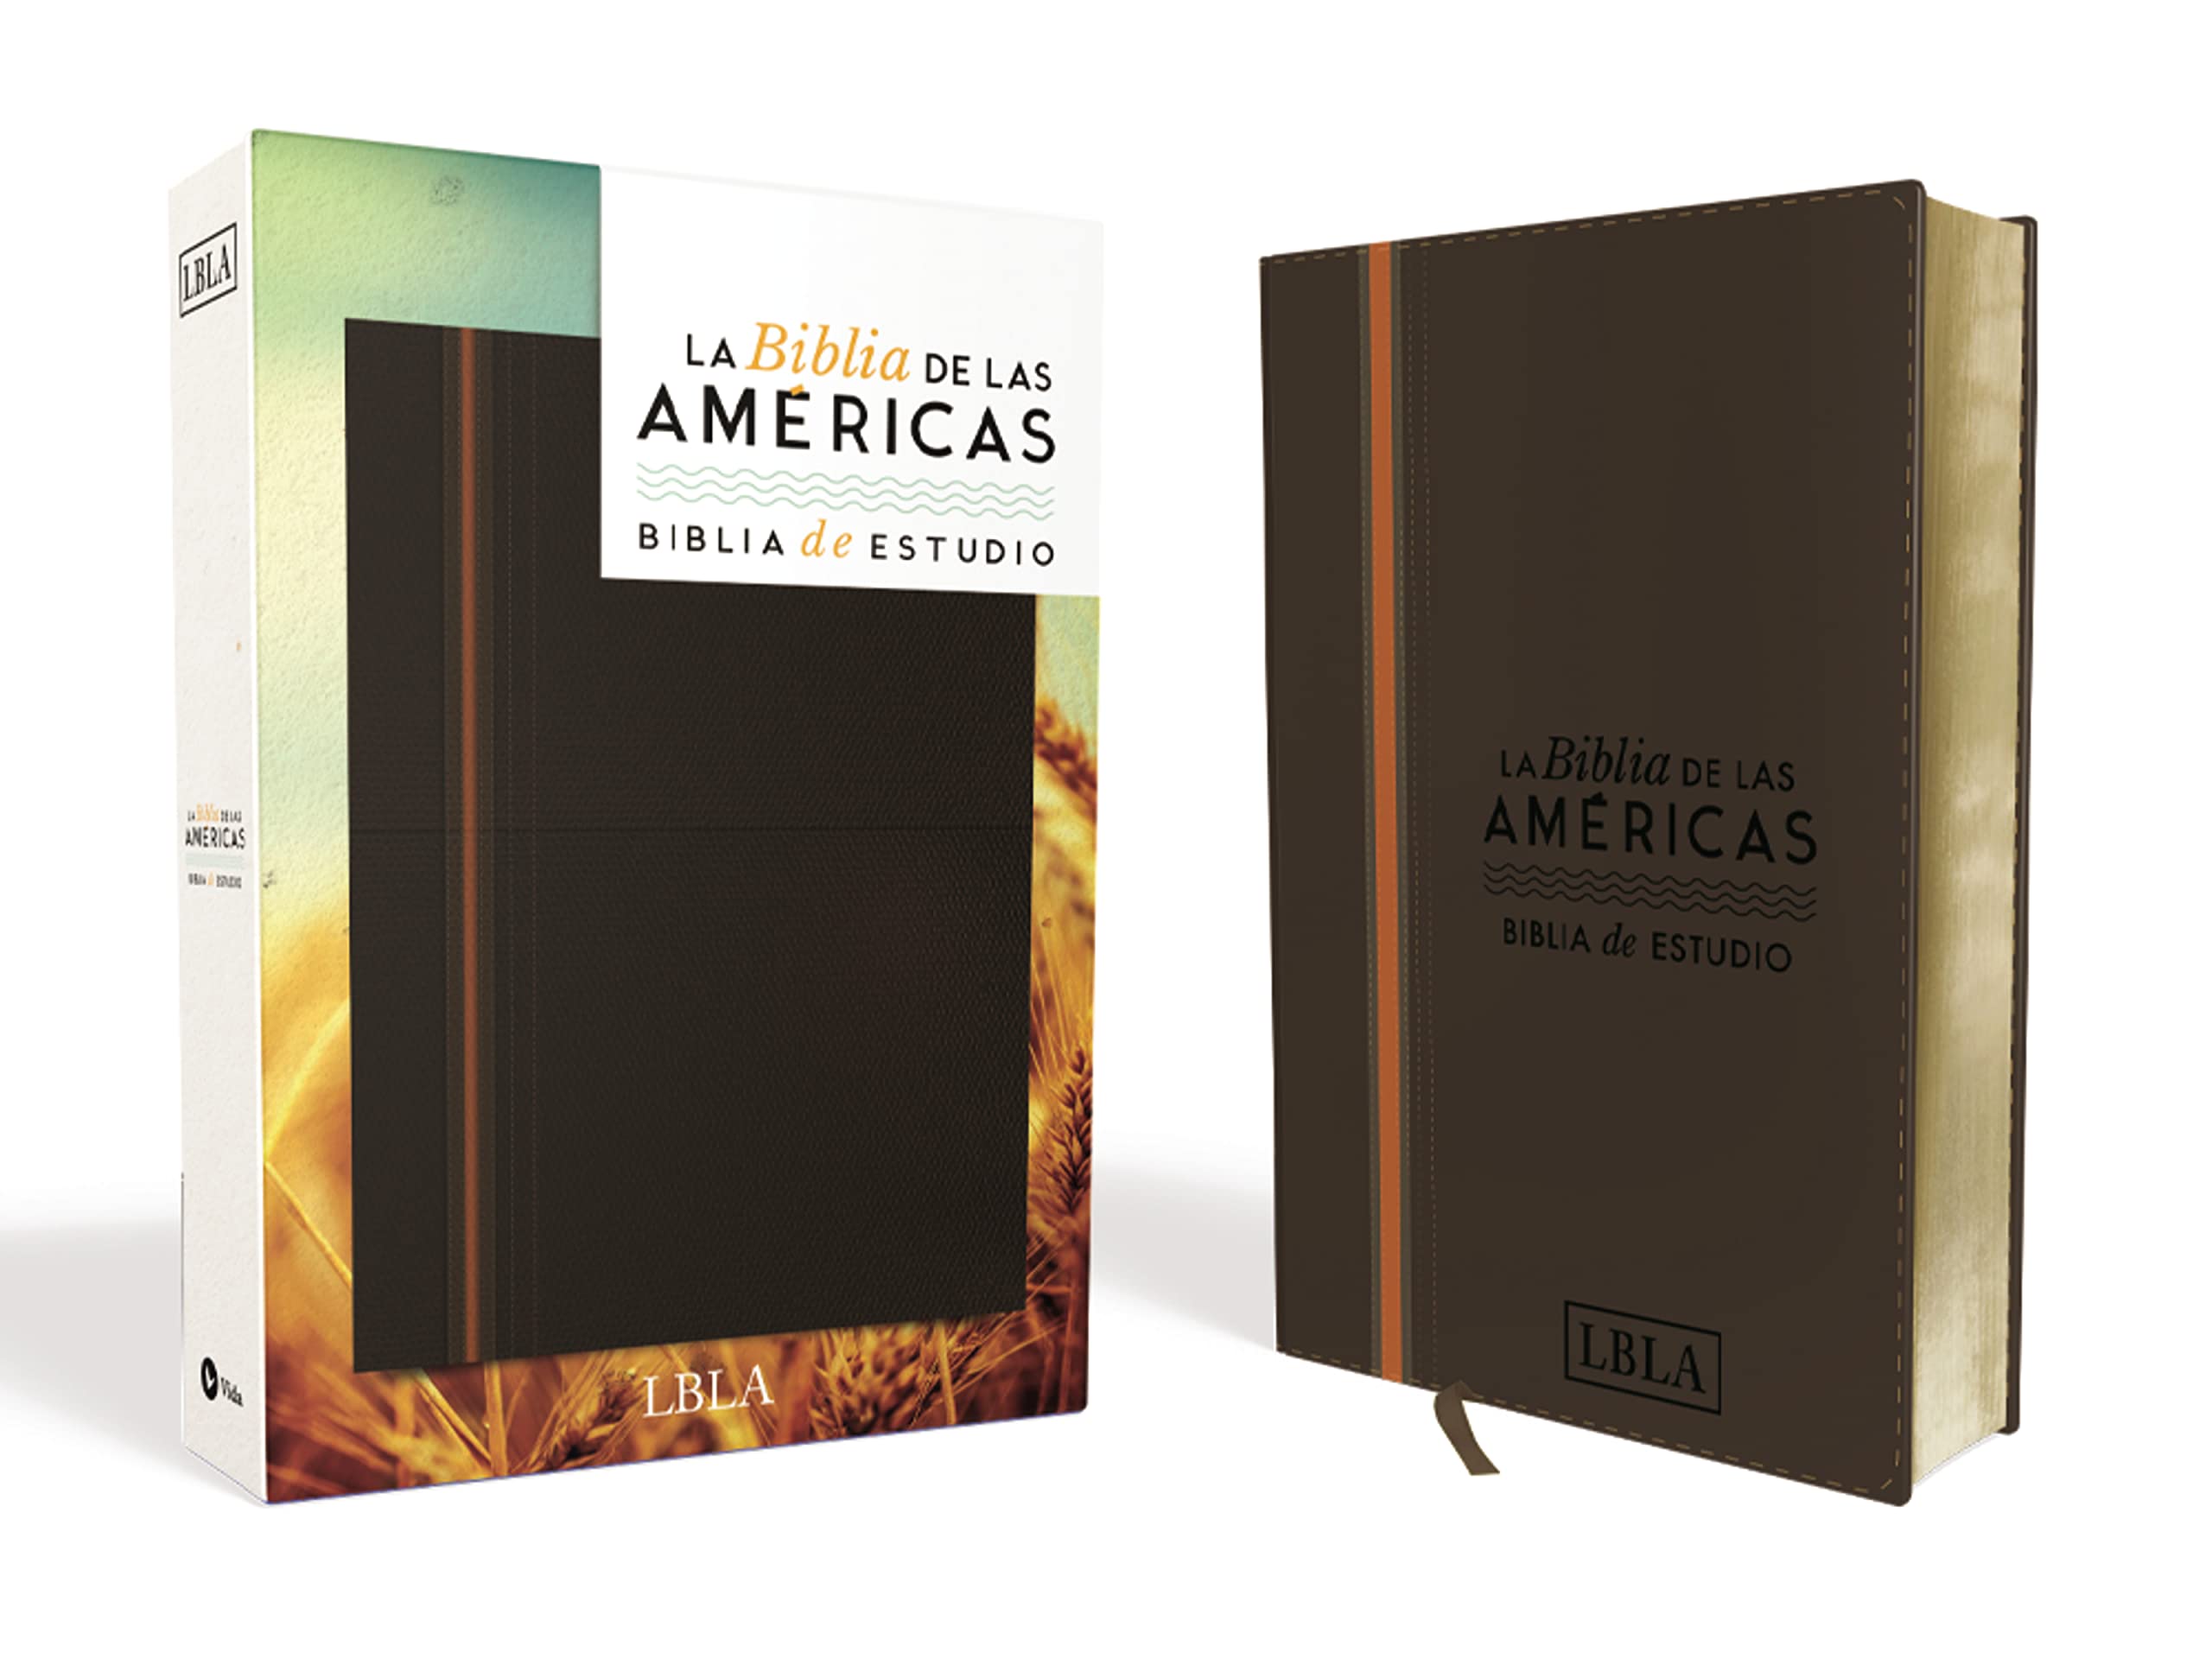 Biblia de Estudio, LBLA, Leathersoft / Spanish Study Bible, LBLA, Leathersoft (Spanish Edition)